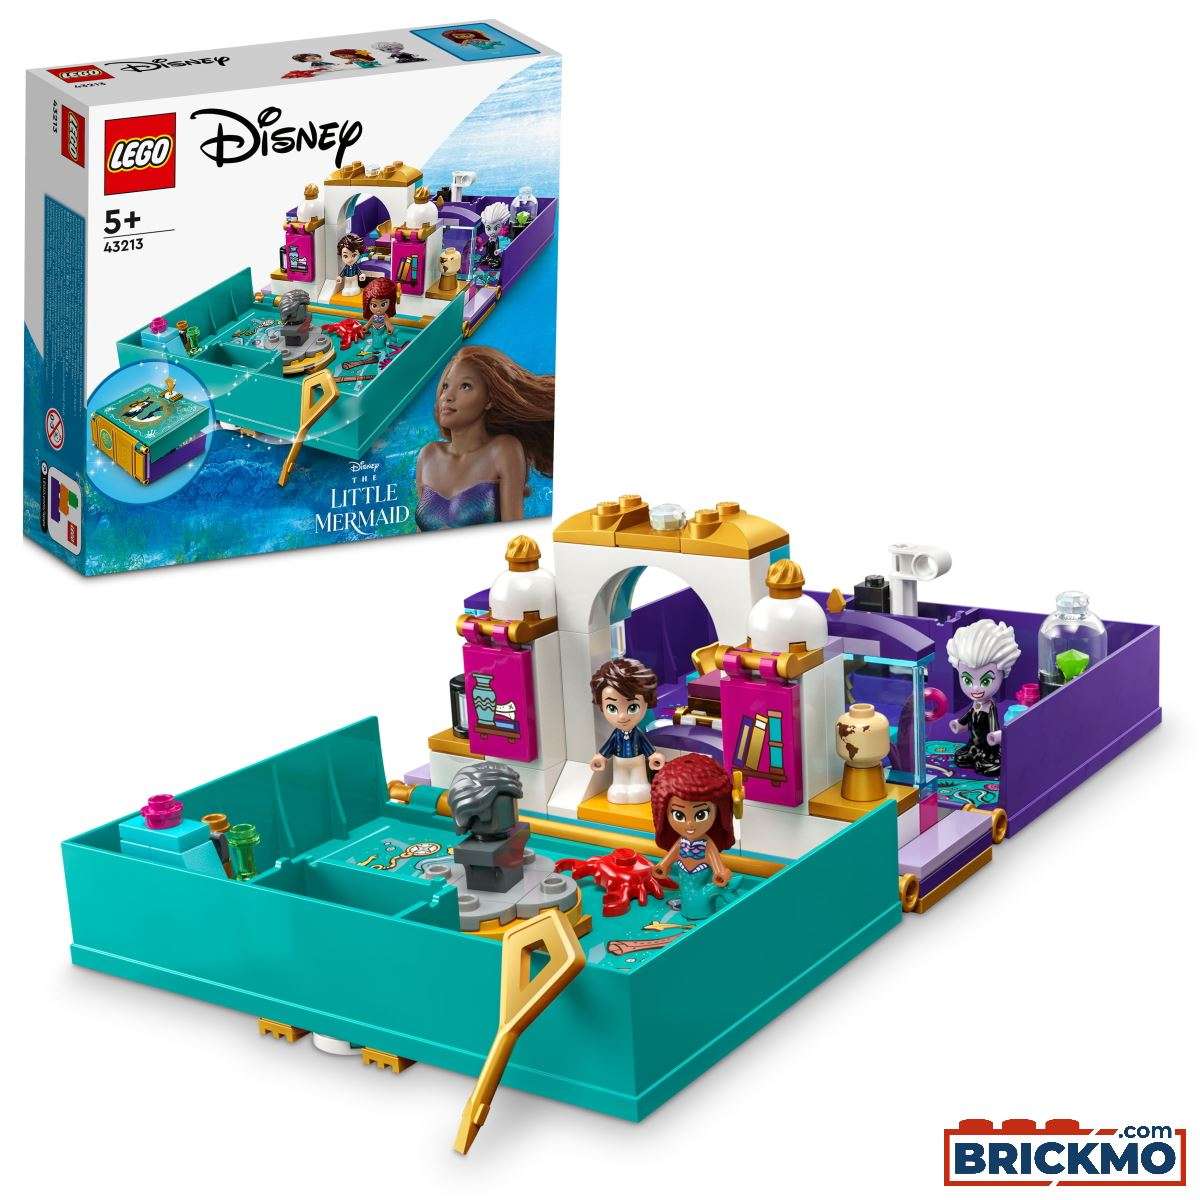 LEGO Disney 43213 The Little Mermaid Story Book 43213